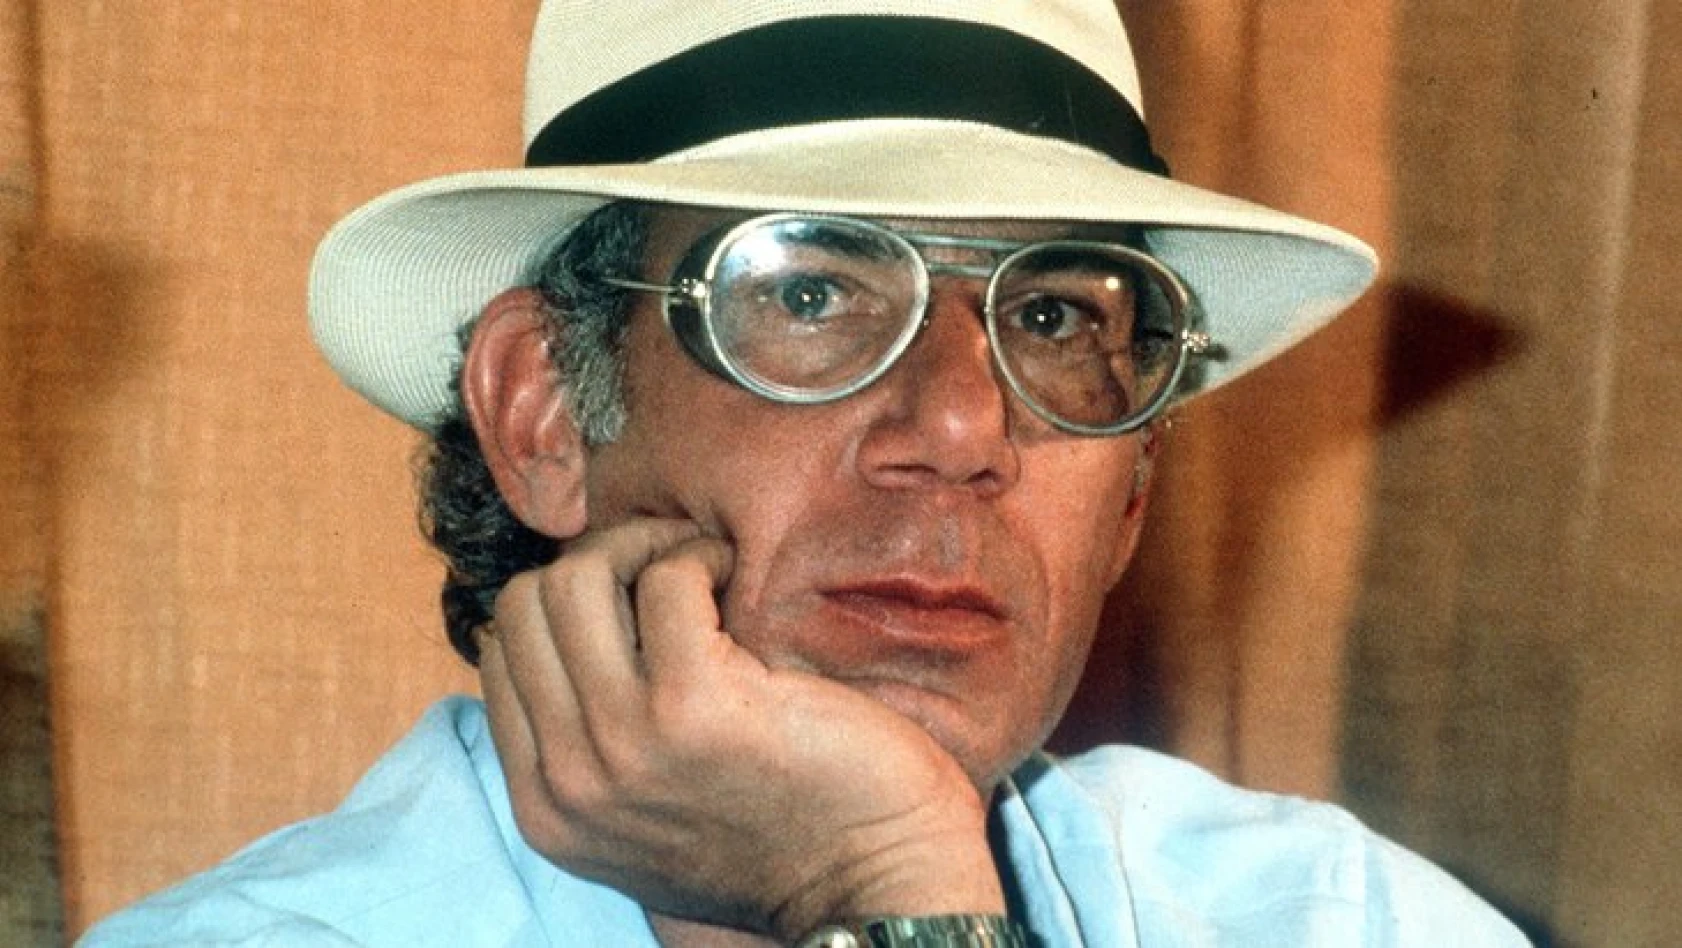 Yönetmen Bob Rafelson, yaşamını yitirdi